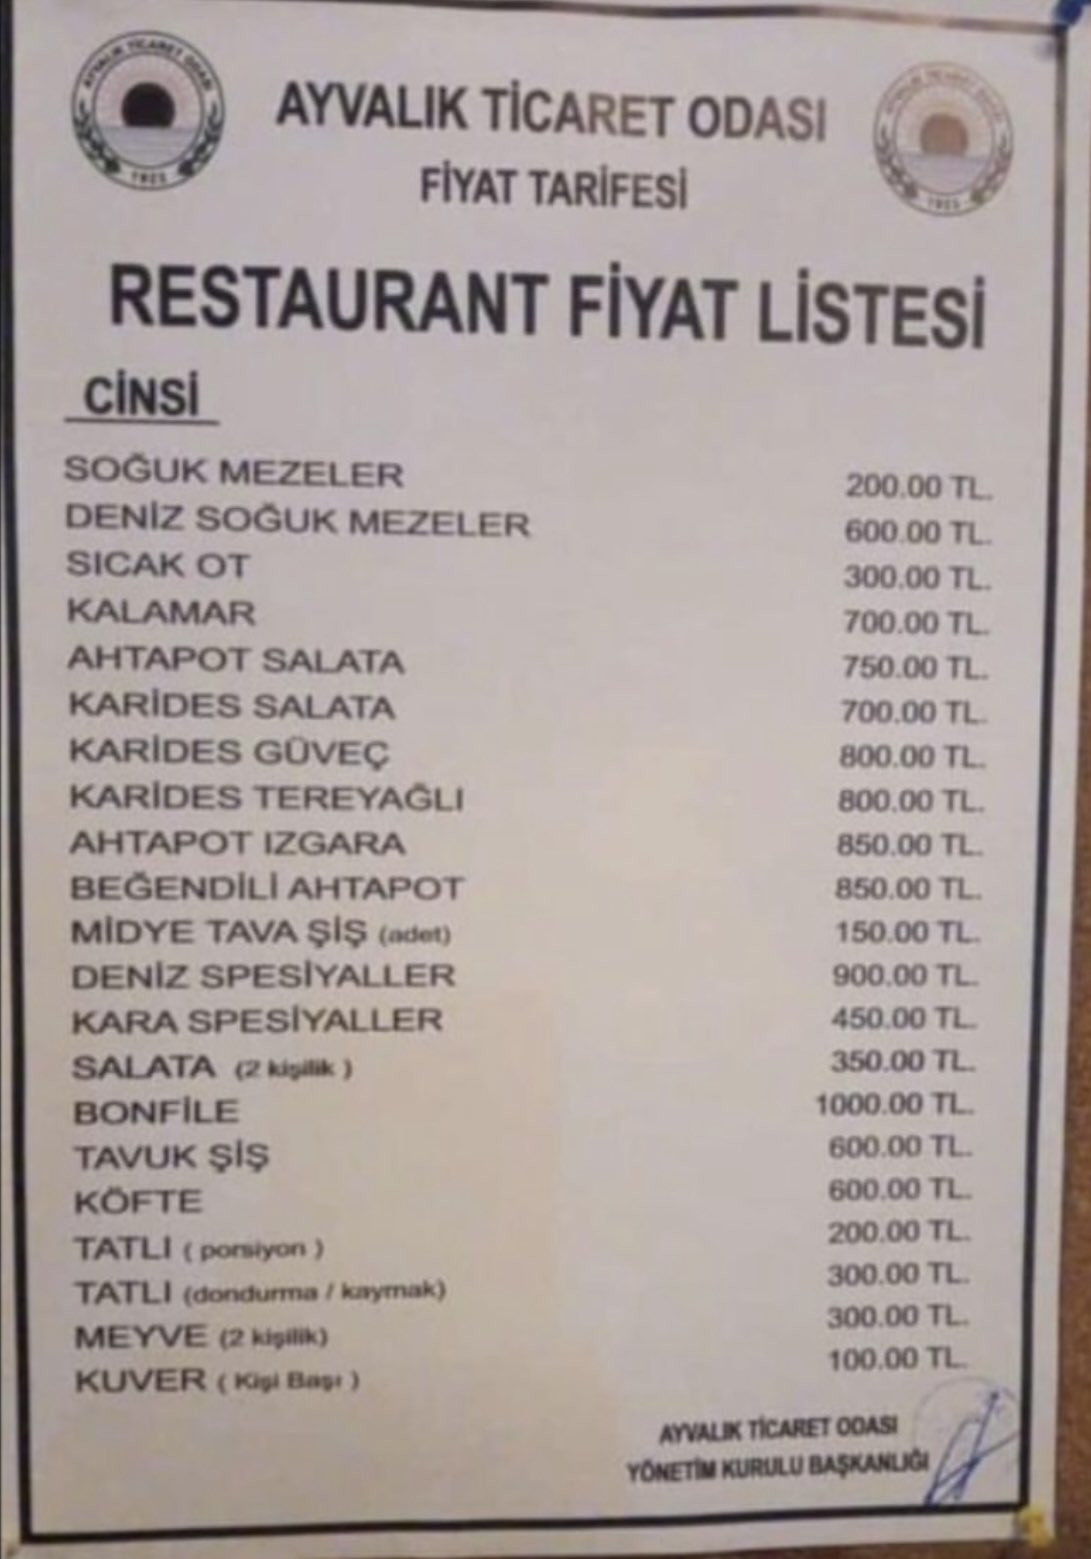 ayvalikta restoran fiyatlari gundem oldu bonfile 1000 tl tavuk sis 600 tl 0 BAqfvysv